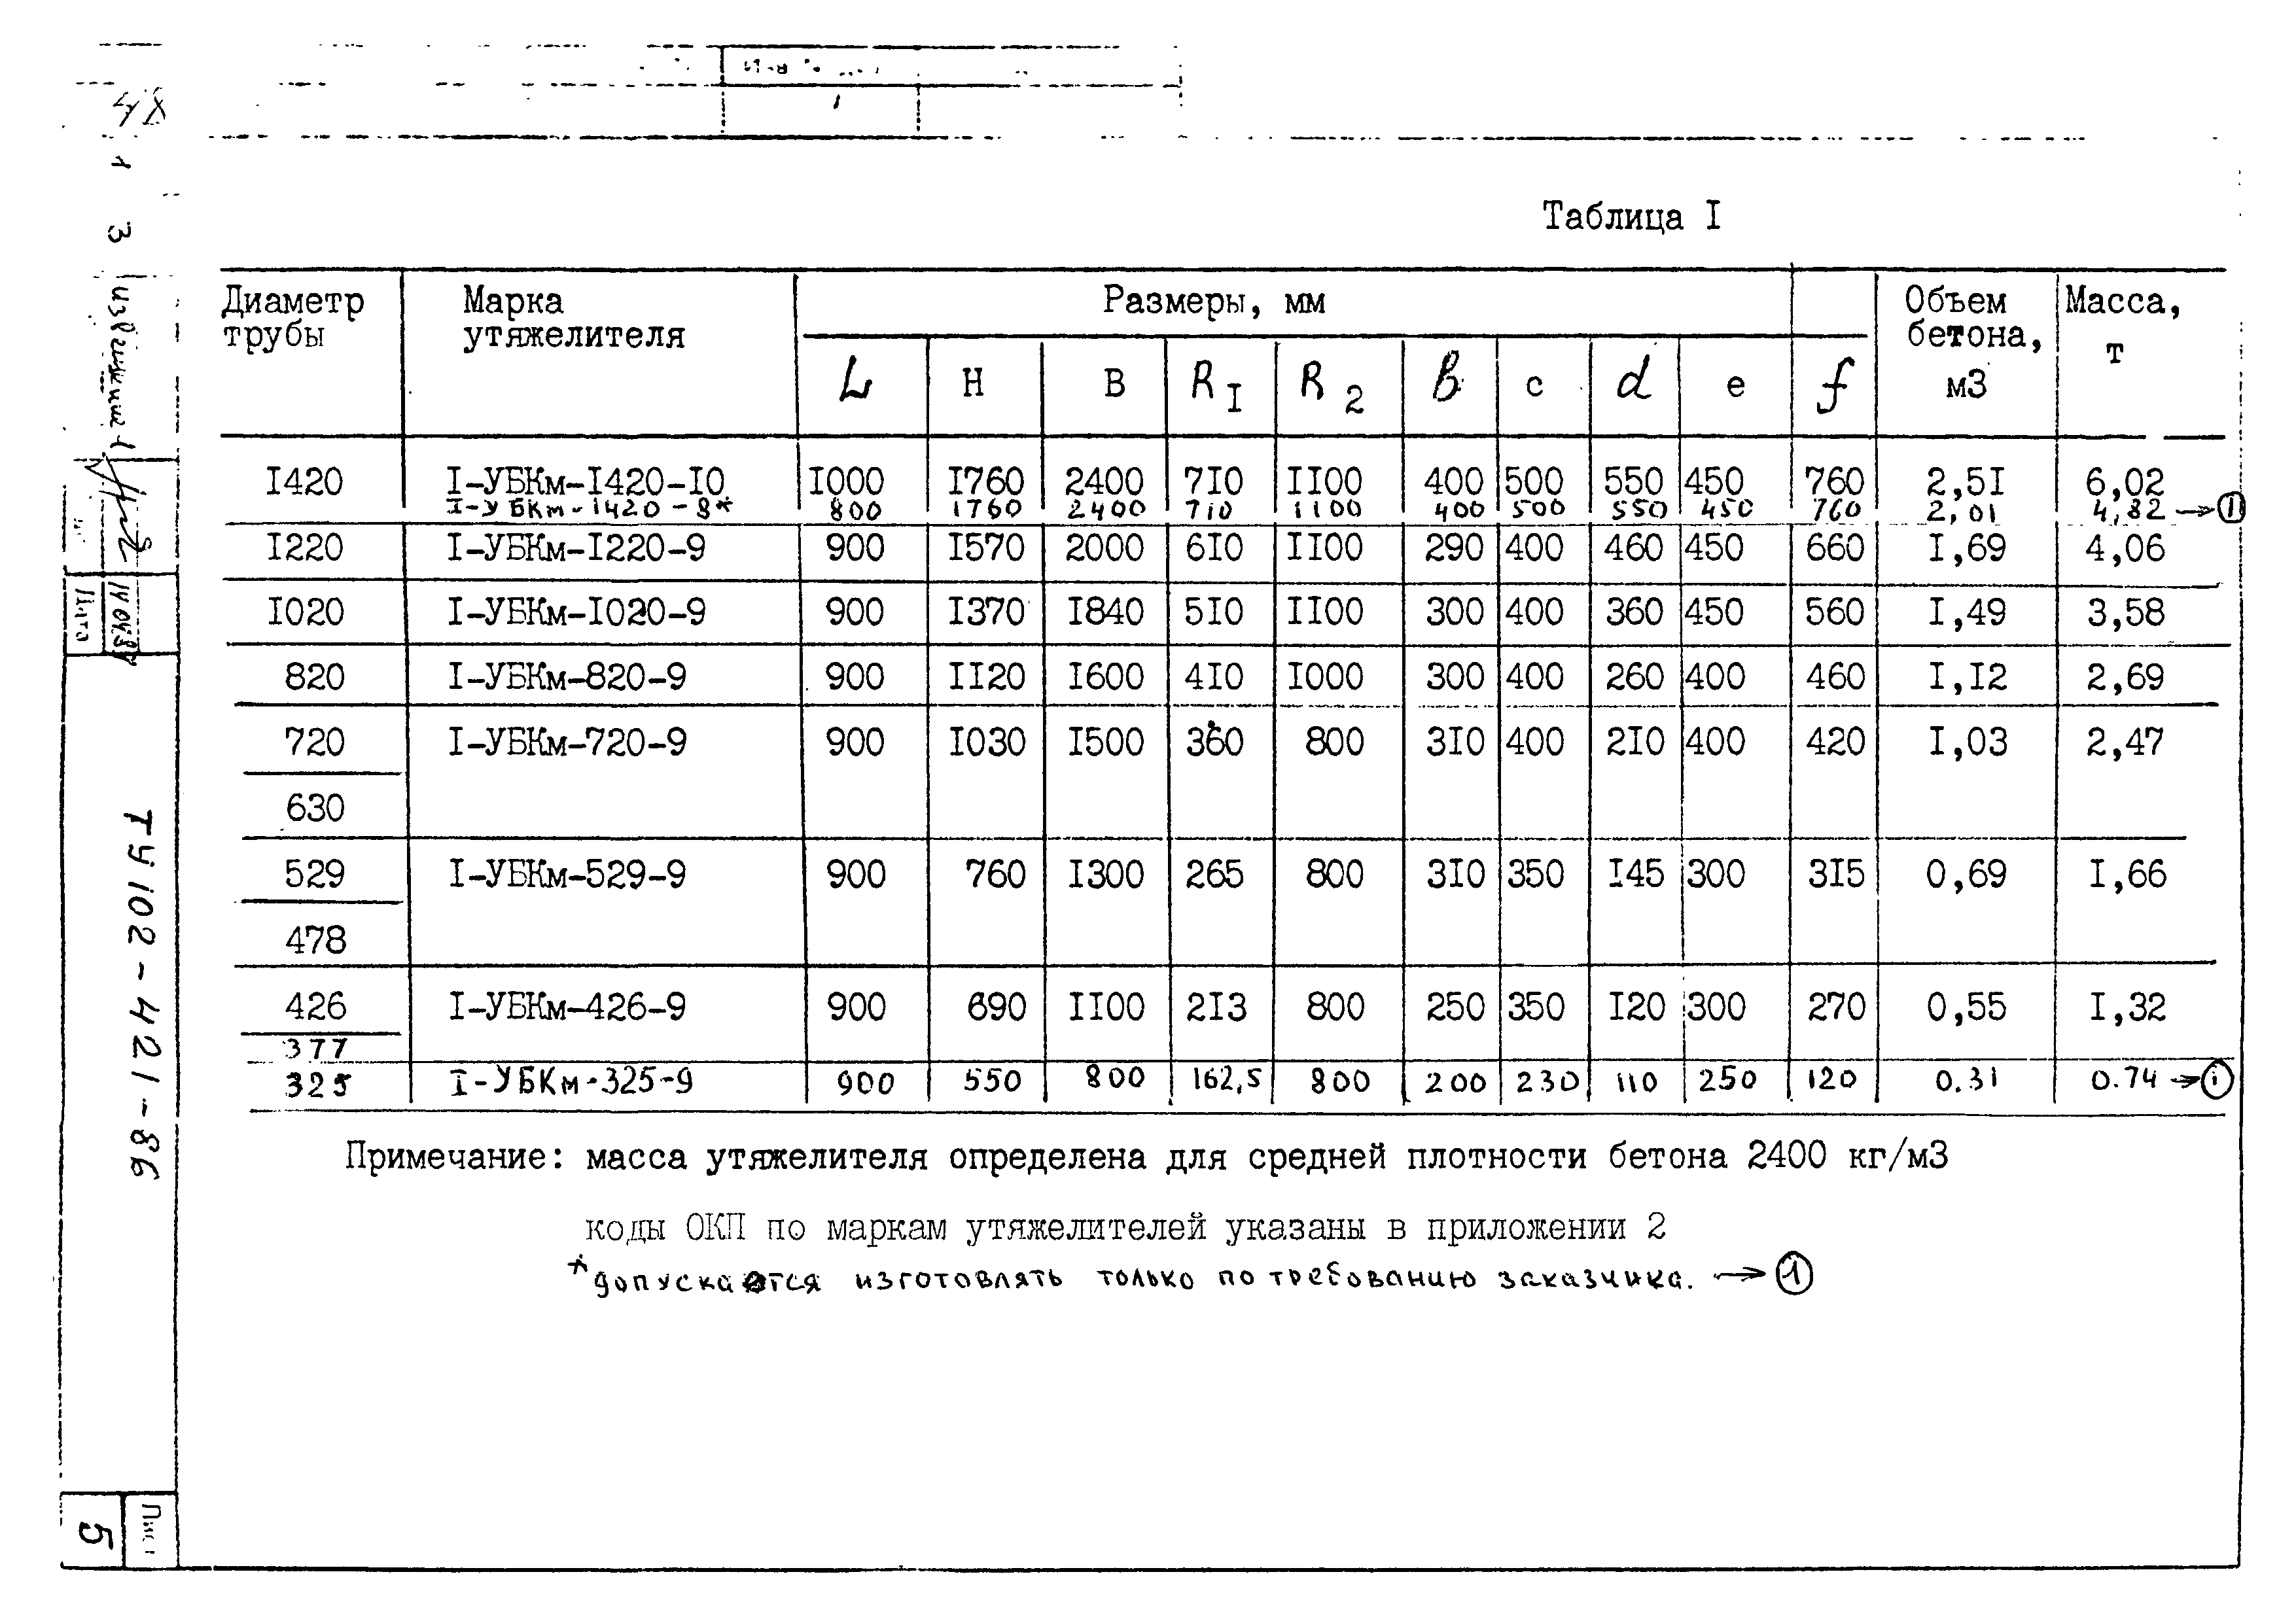 ТУ 102-421-86